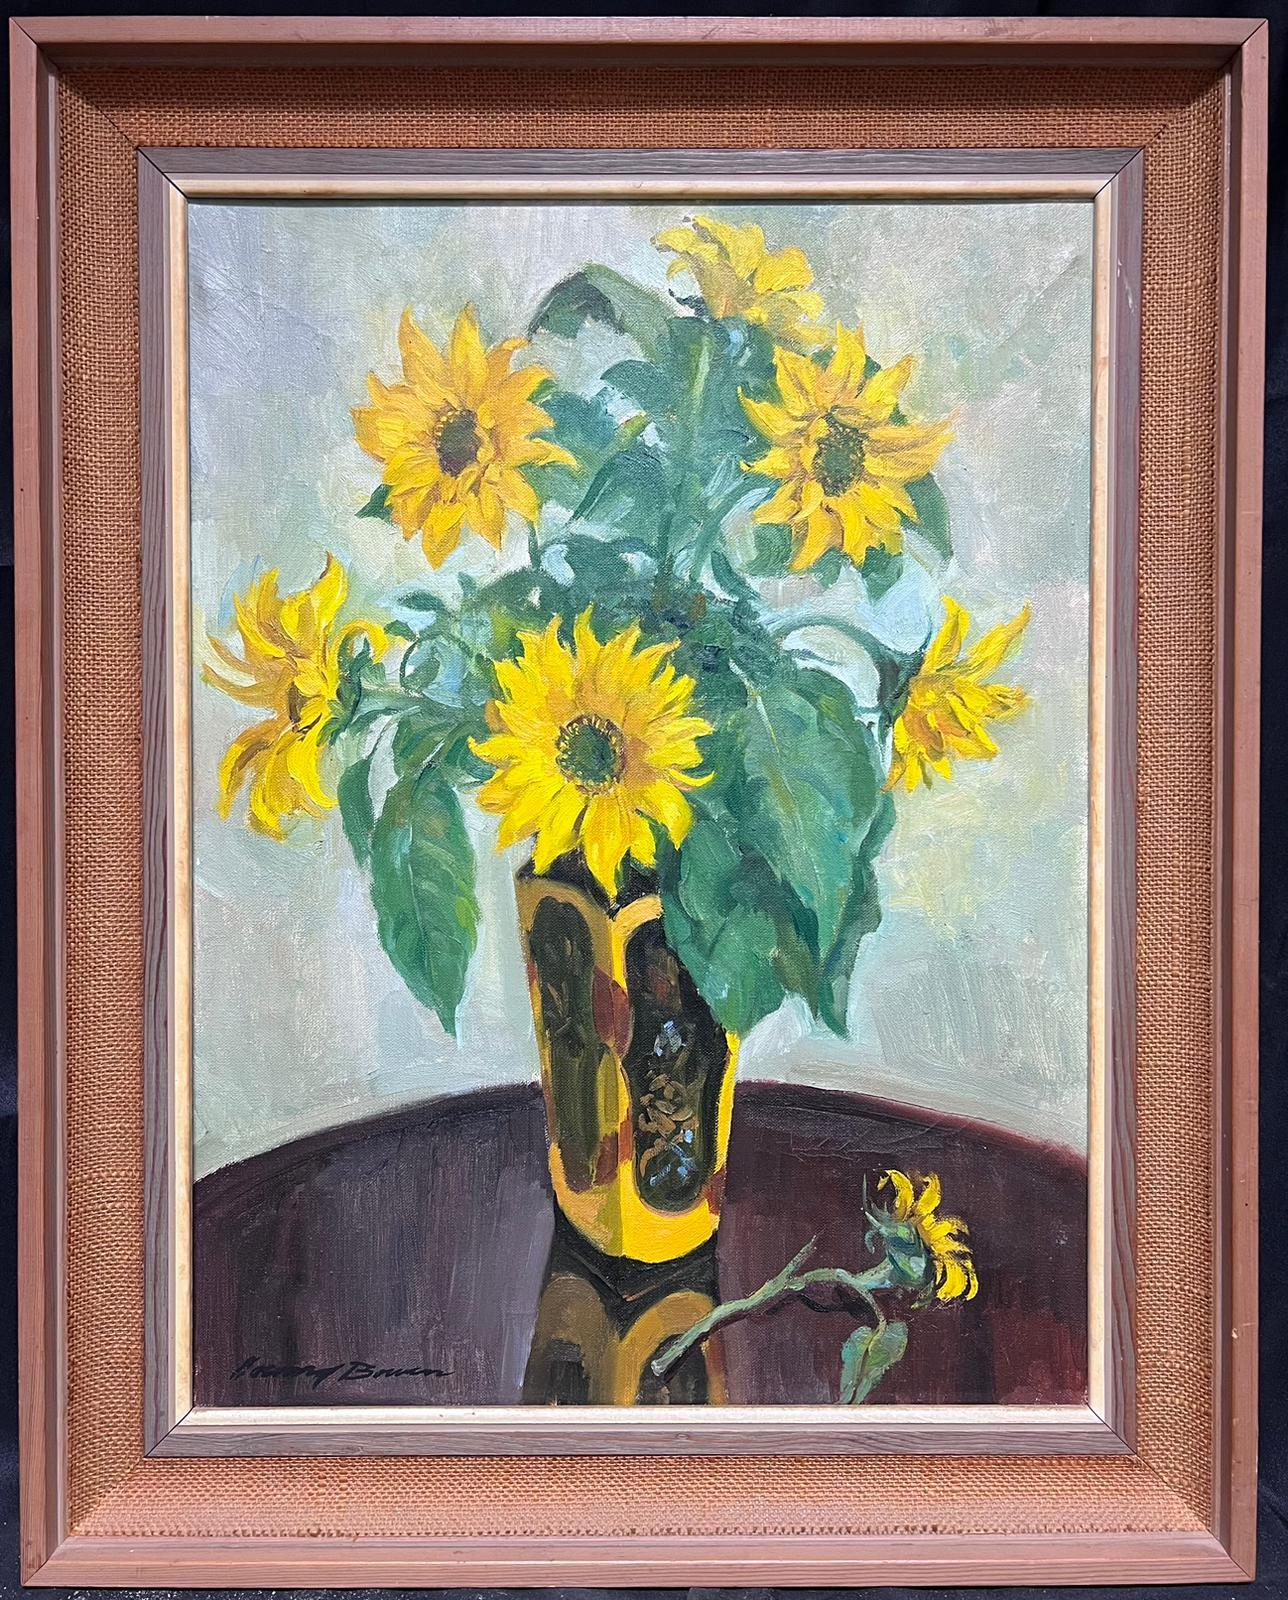 Still-Life Painting Mid 20th Century English Impressionist - Tournesols dans un vase 1950's English Impressionist Signed Oil Painting on Canvas